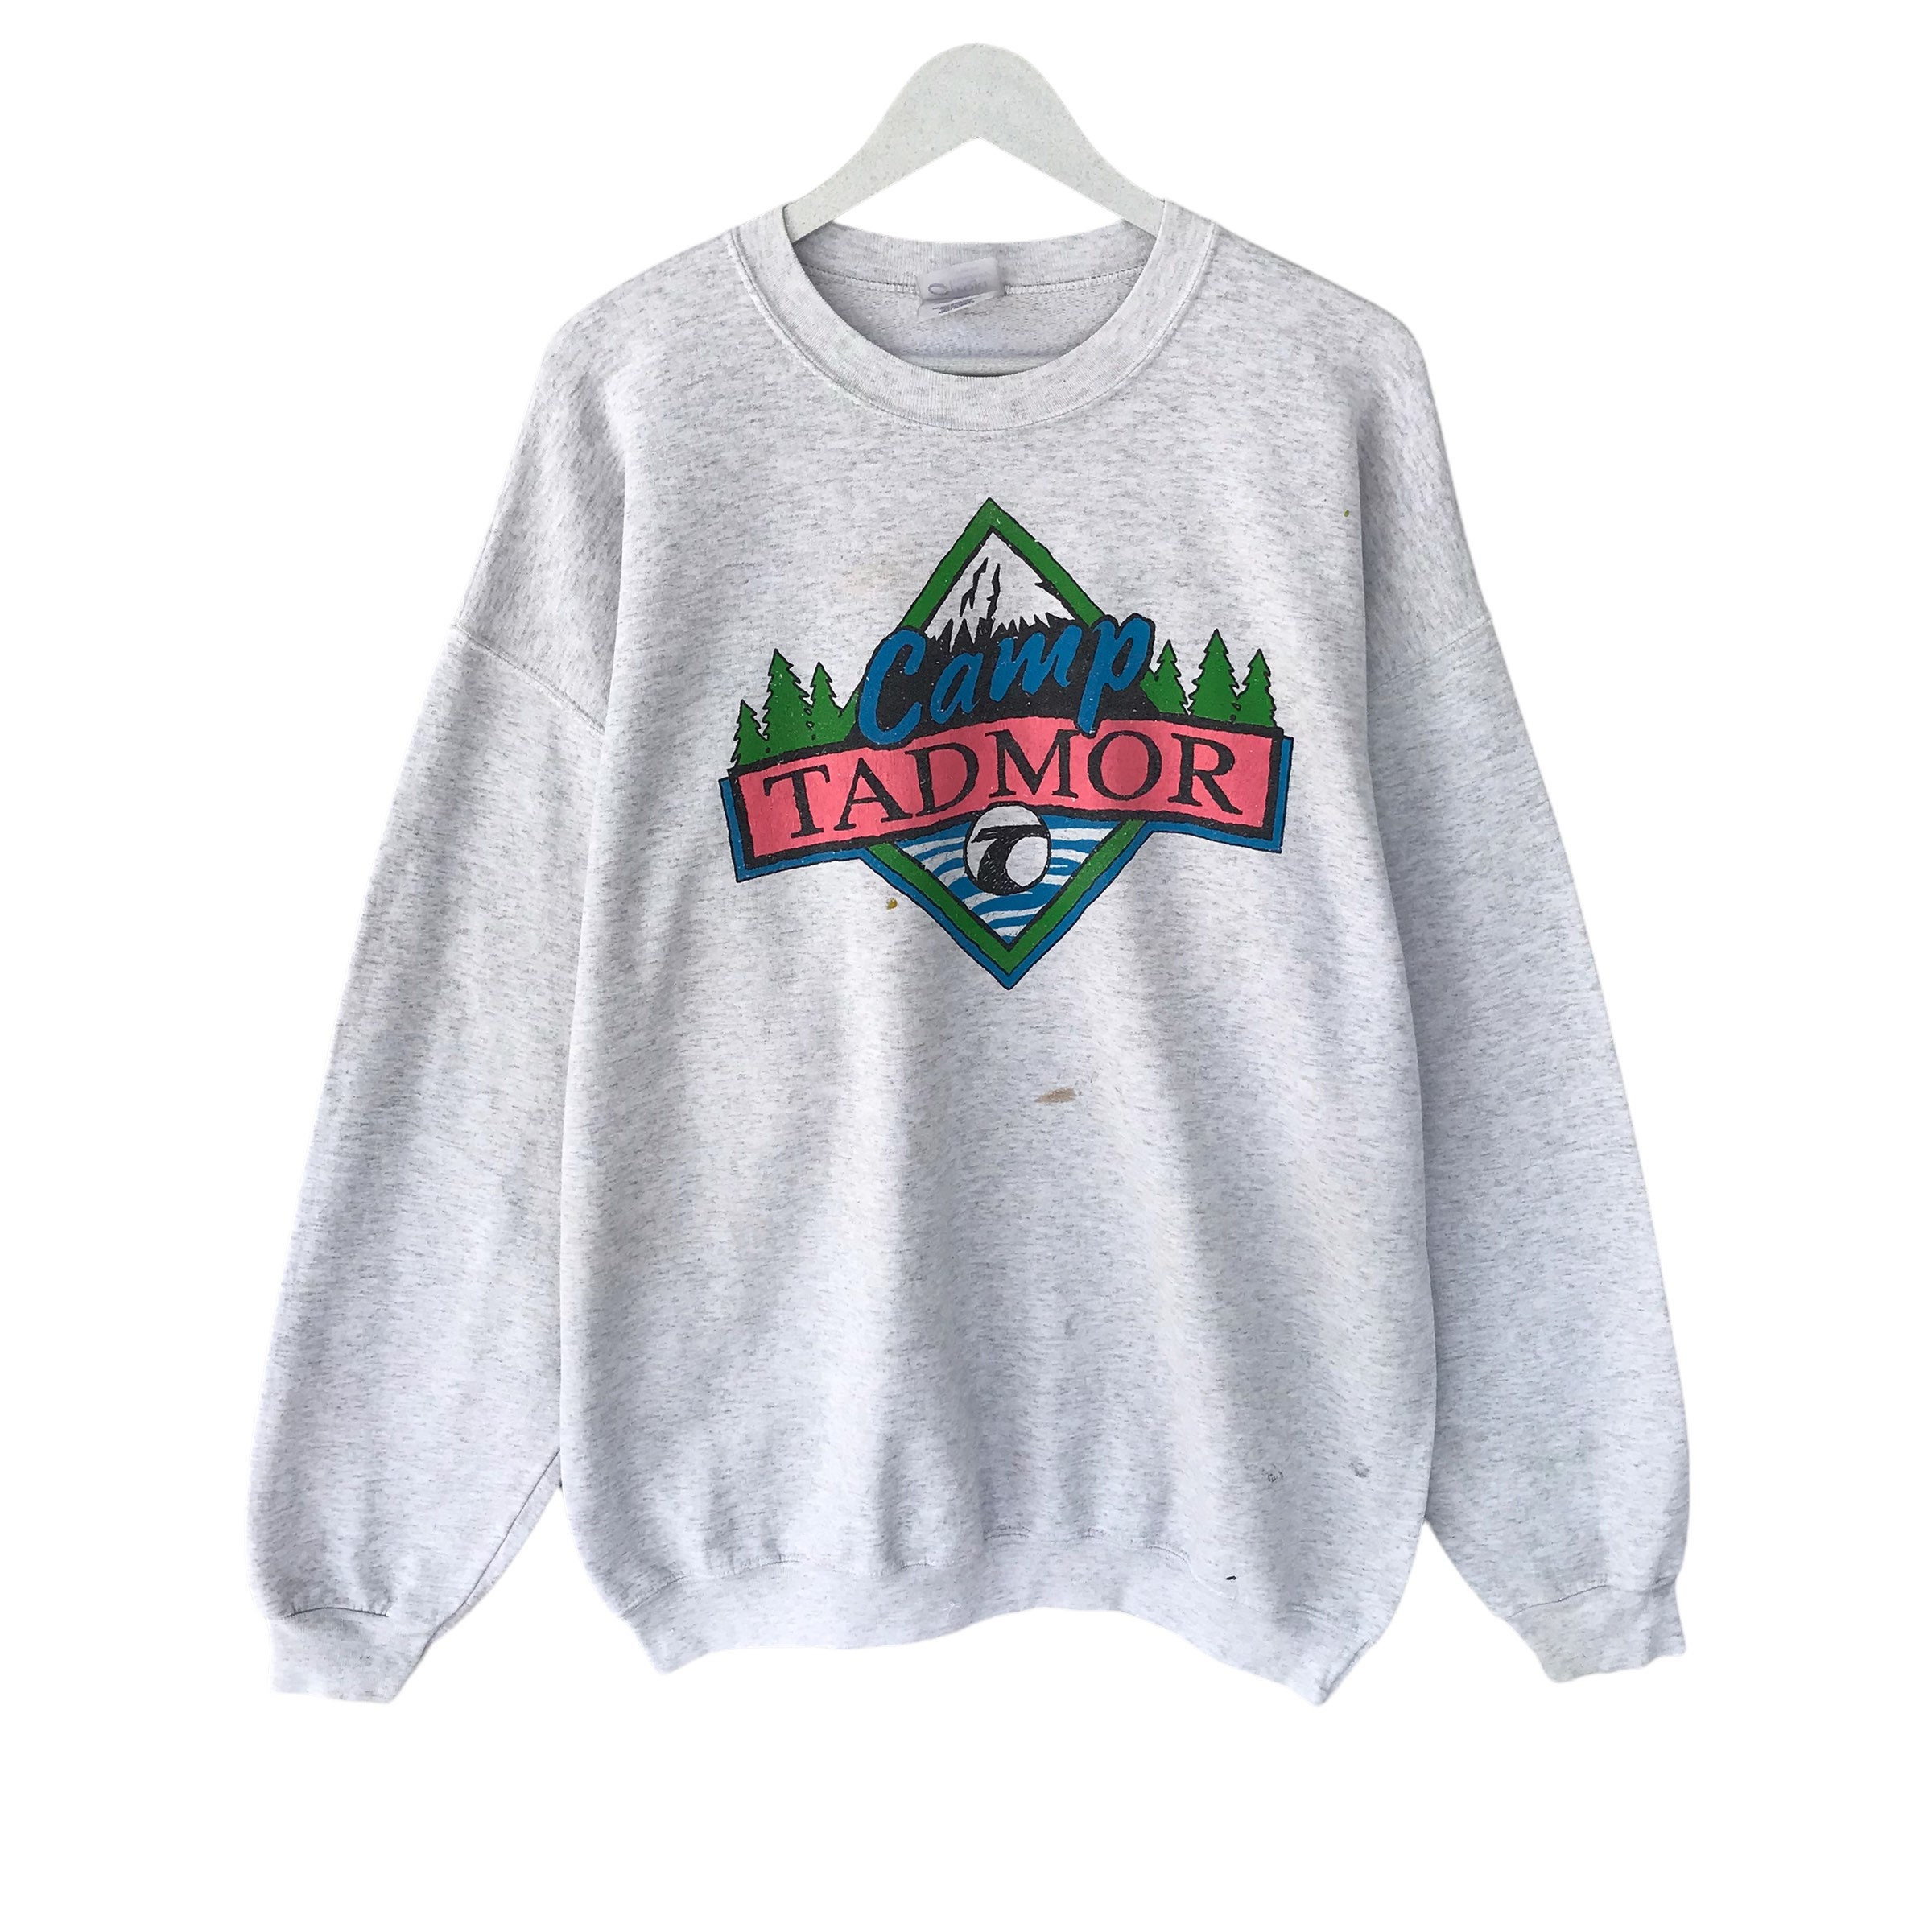 Vintage Camp Tadmor Biglogo Print Sweatshirt Crewneck Pullover Jumper ...